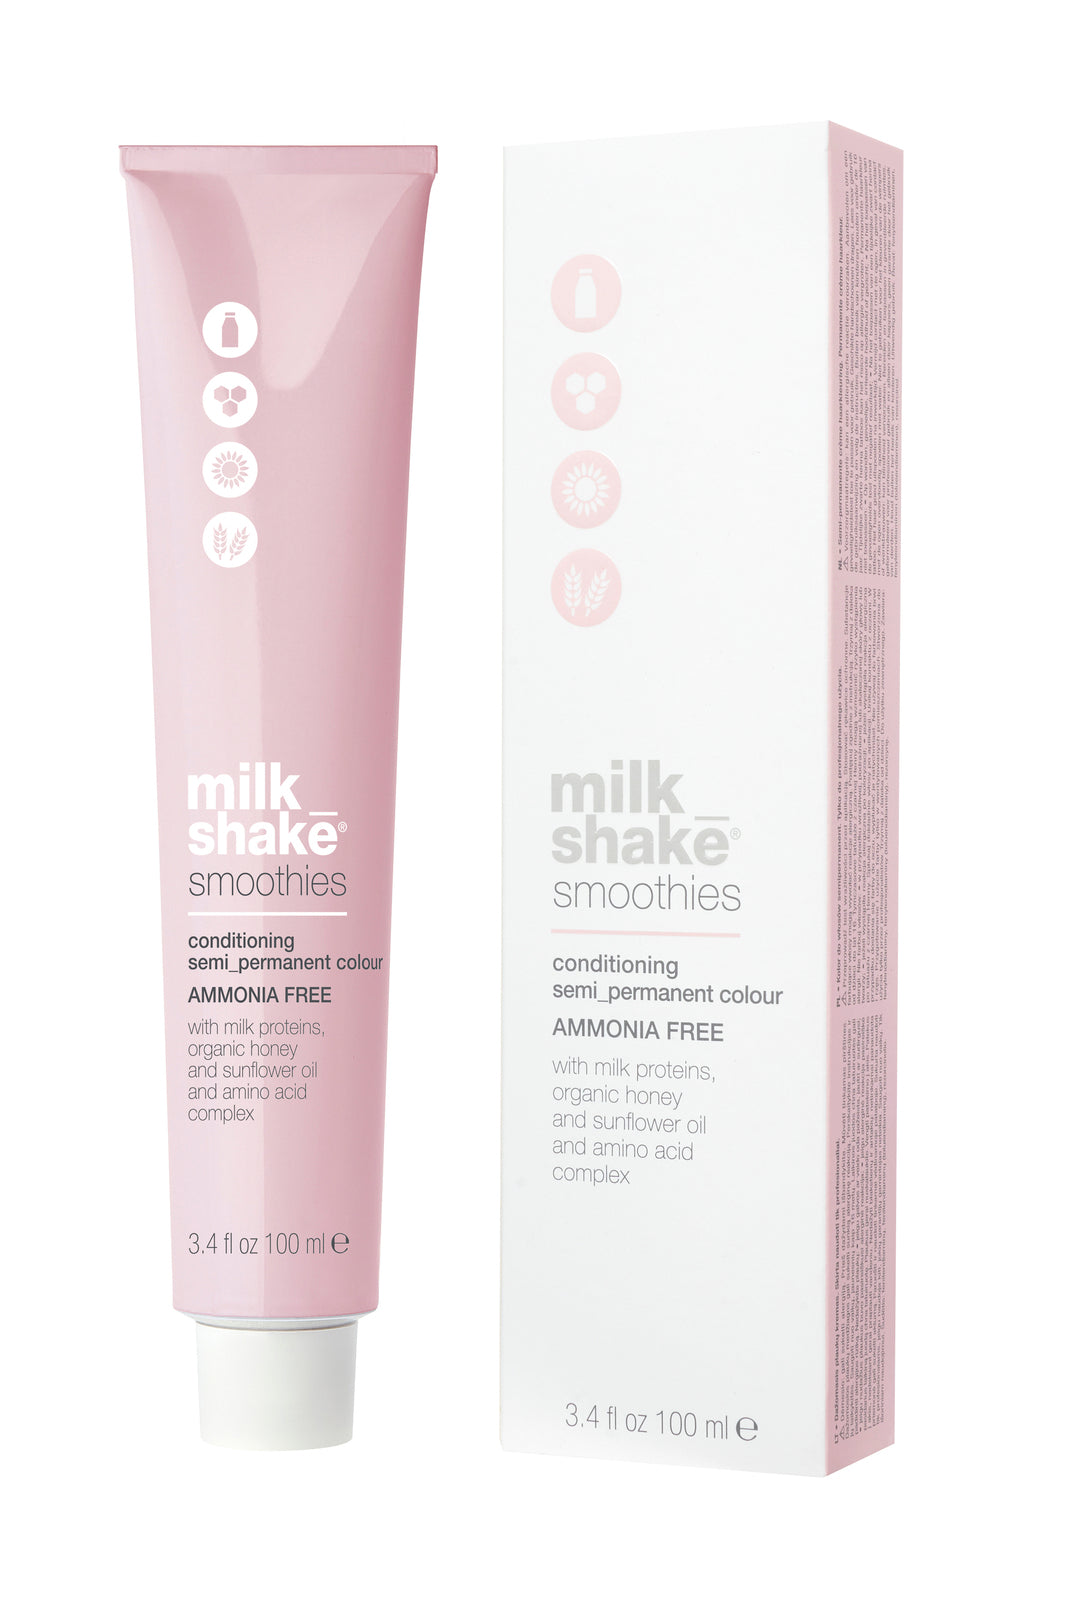 Milkshake smoothies semi-permanent color 8.1